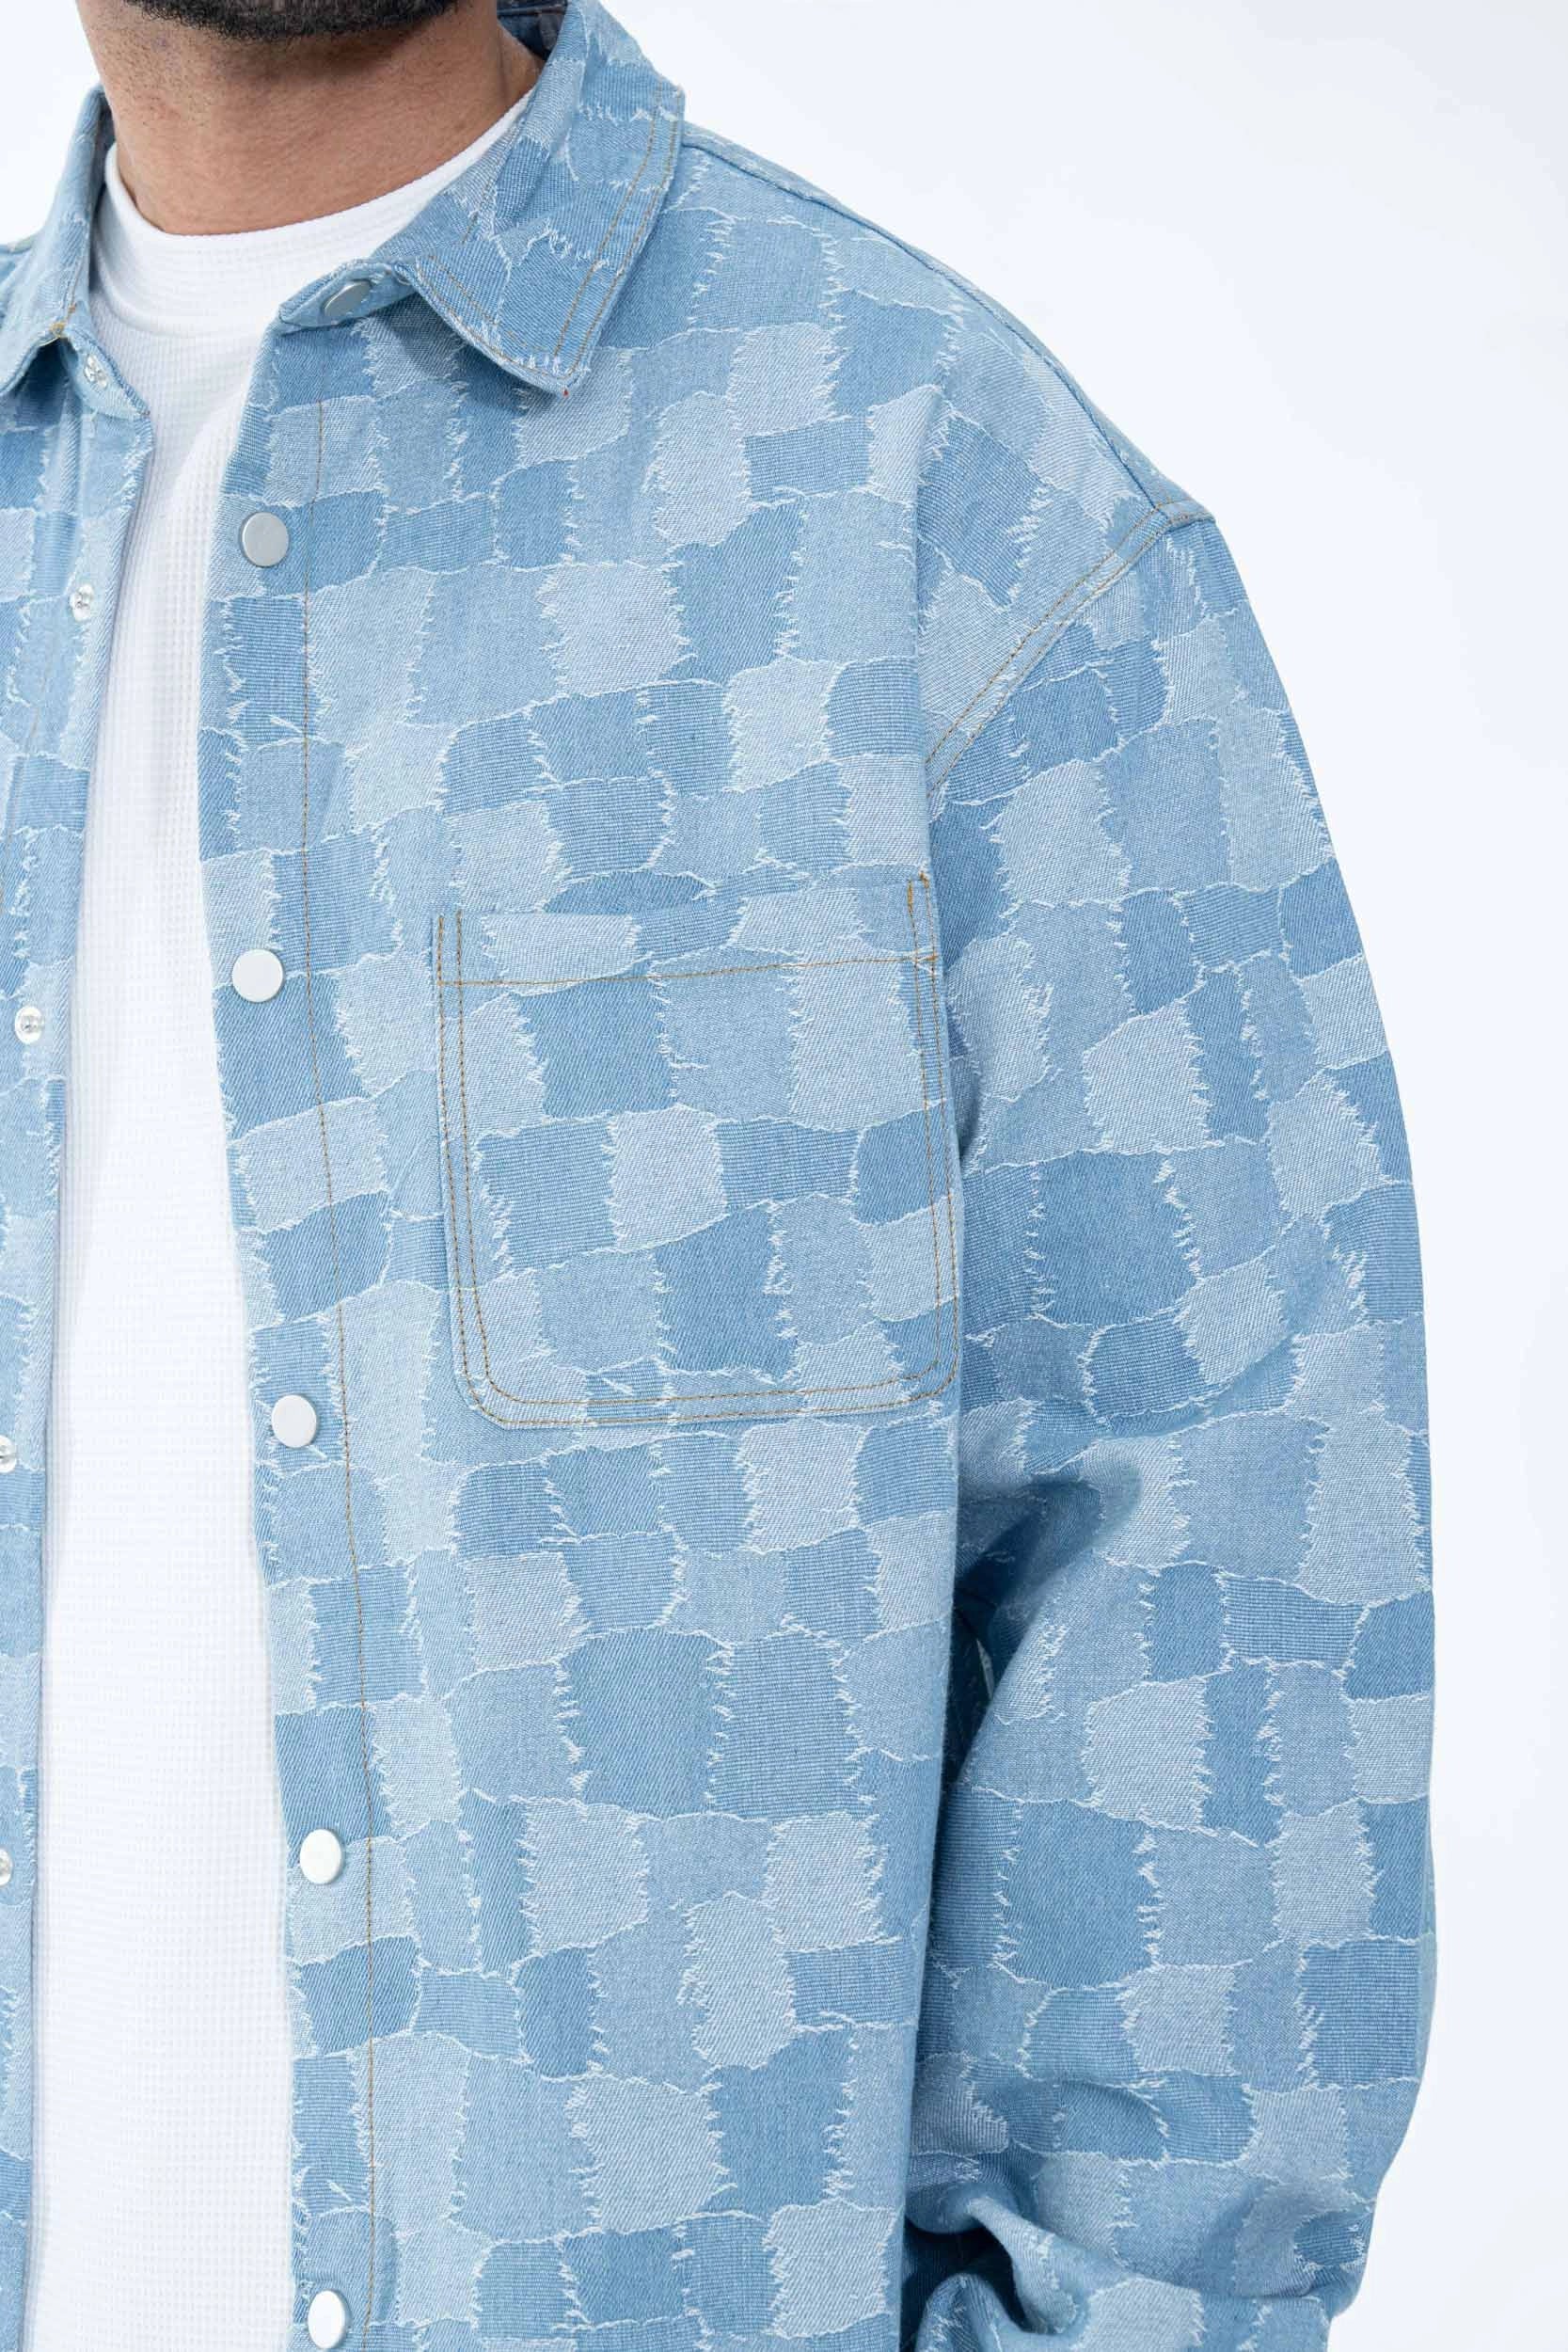 Matching shirt pants set with a square pattern